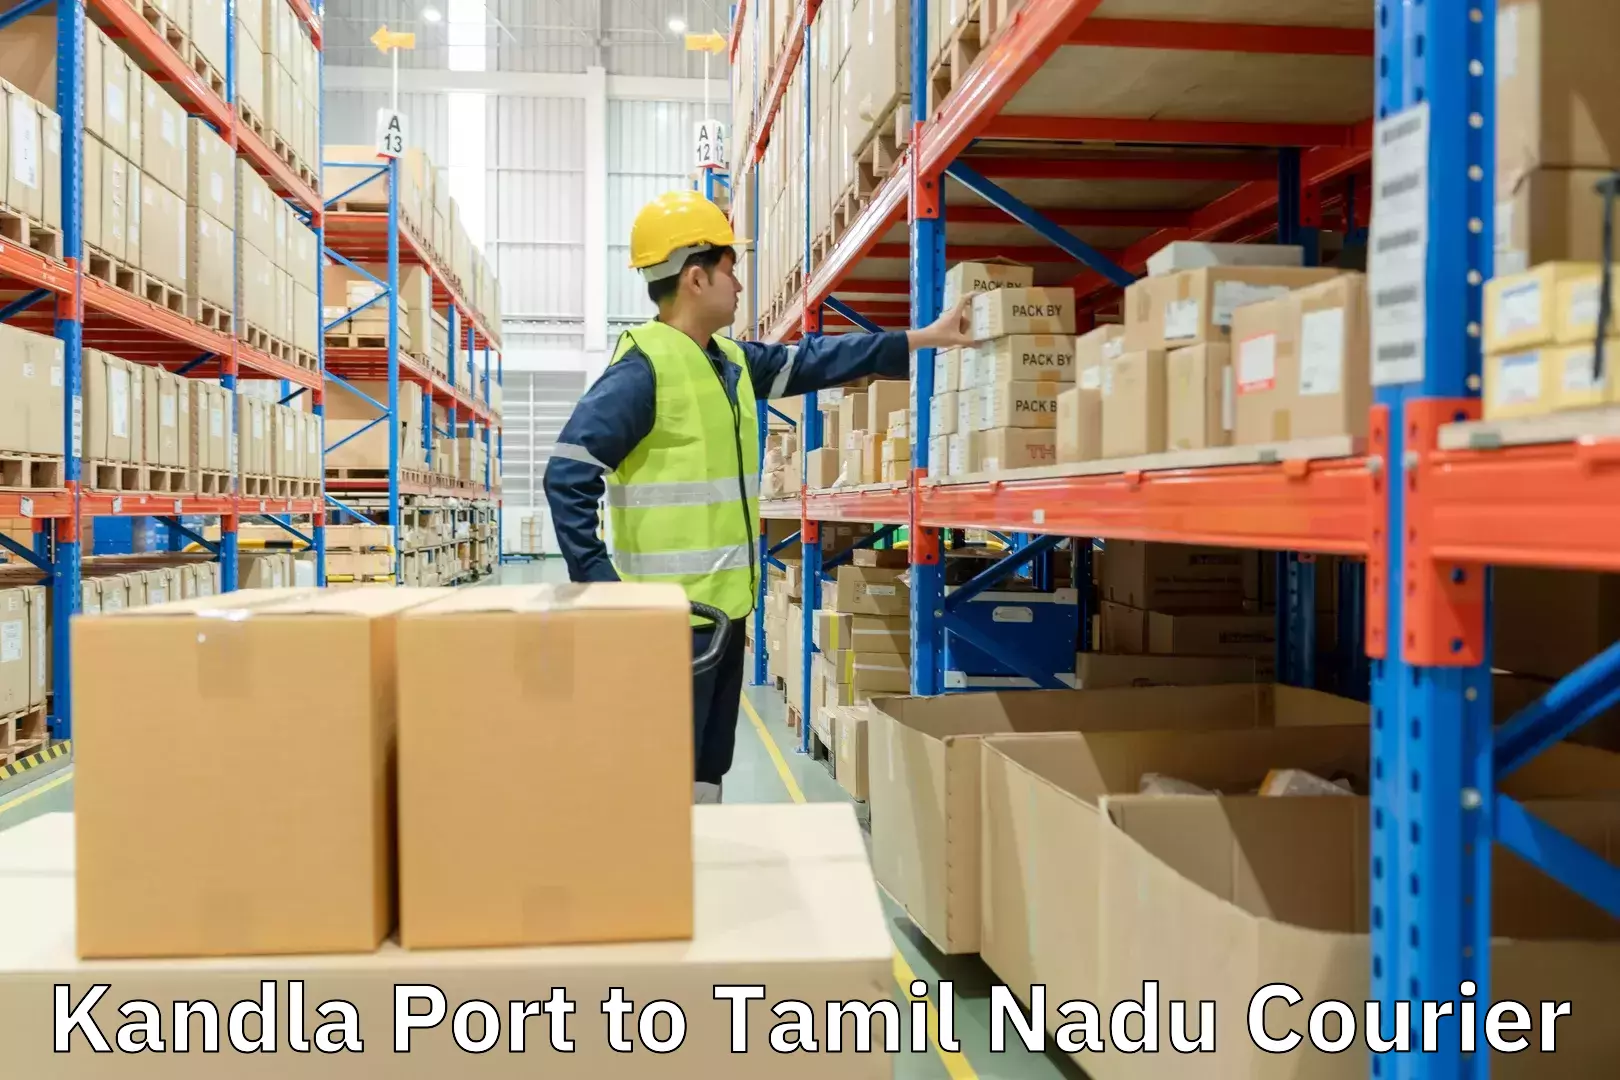 Next day courier Kandla Port to Ennore Port Chennai